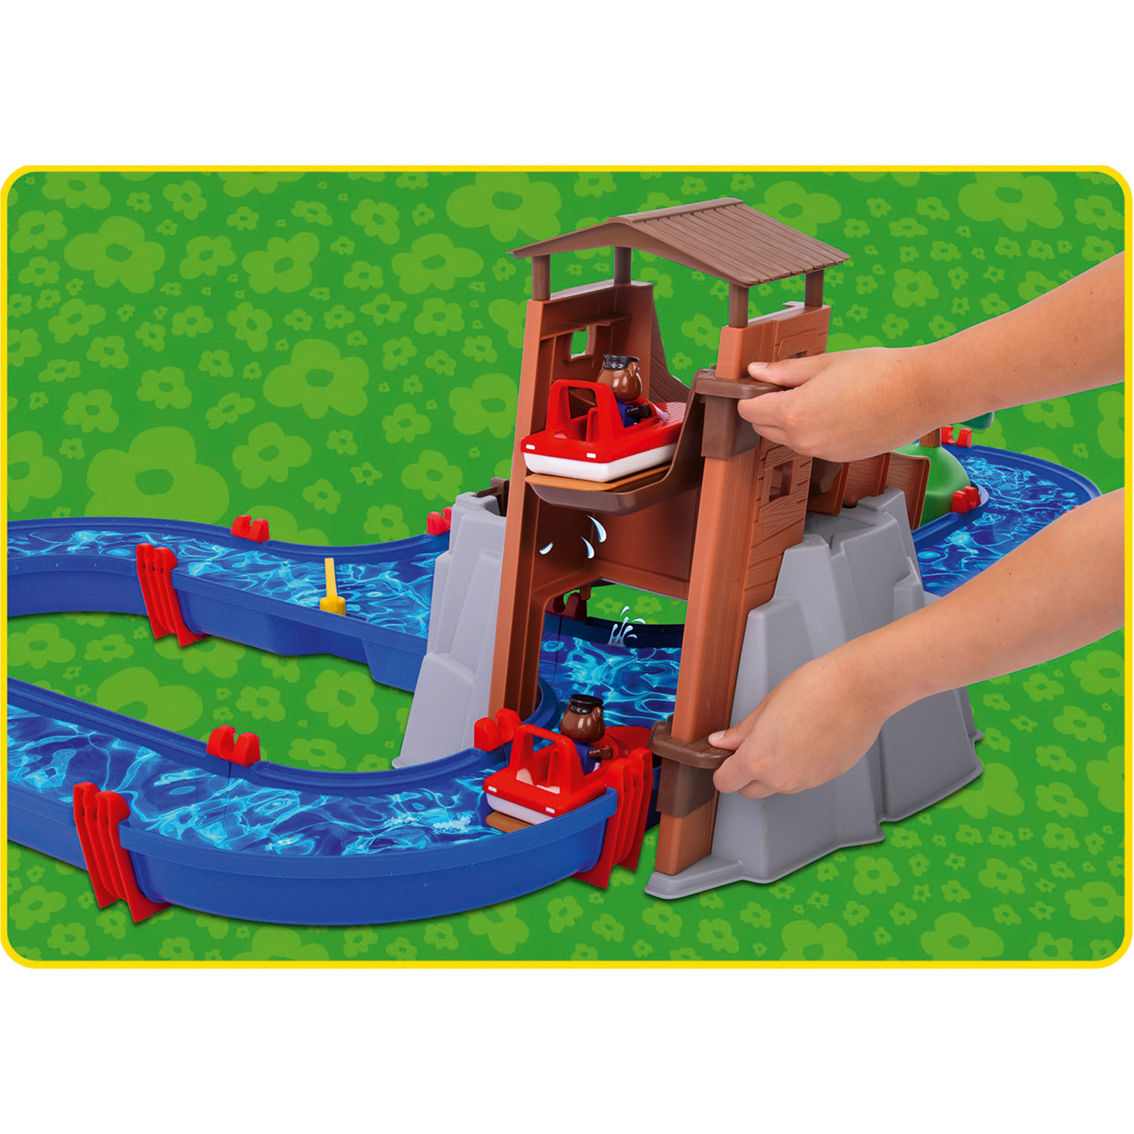 Aquaplay Adventure Land Toy - Image 2 of 5